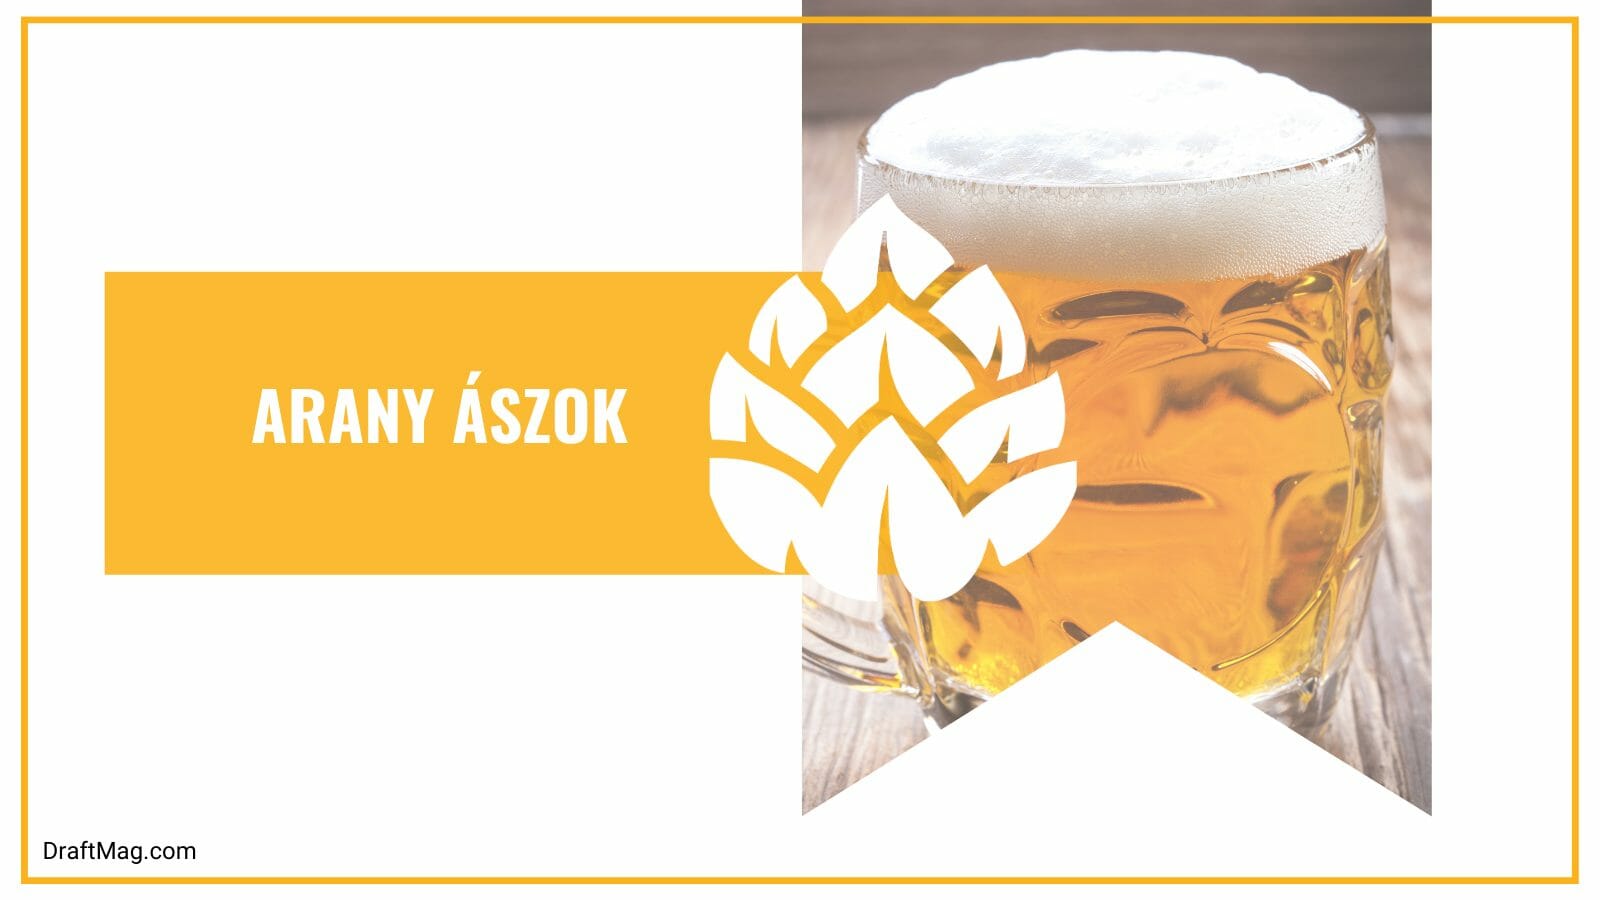 Arany aszok most popular hungary beer